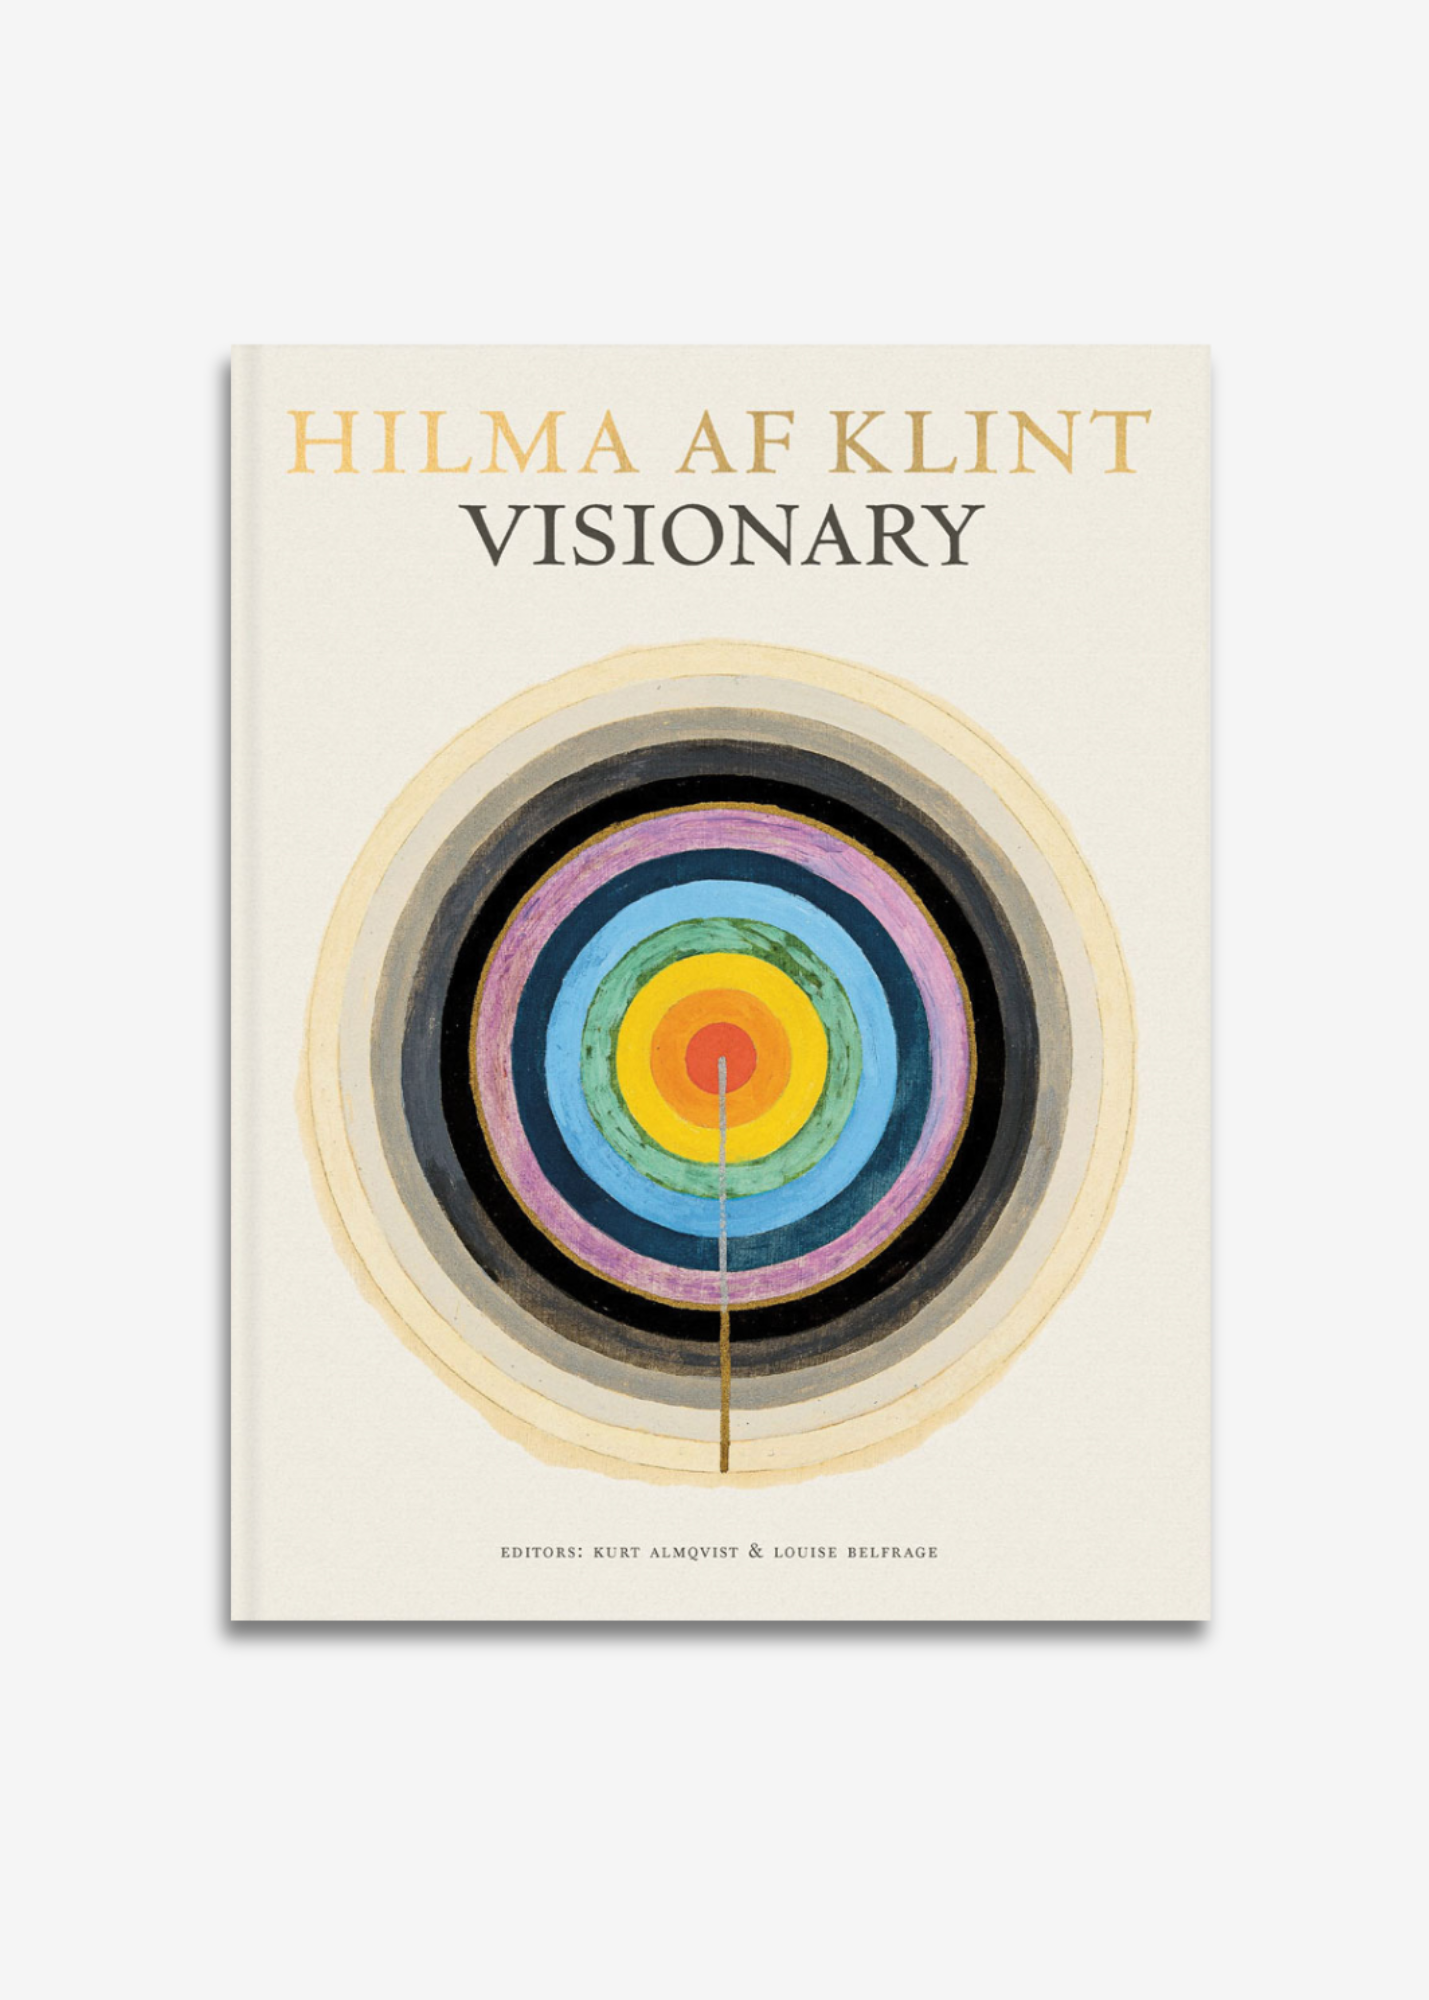 HILMA AF KLINT: VISIONARY